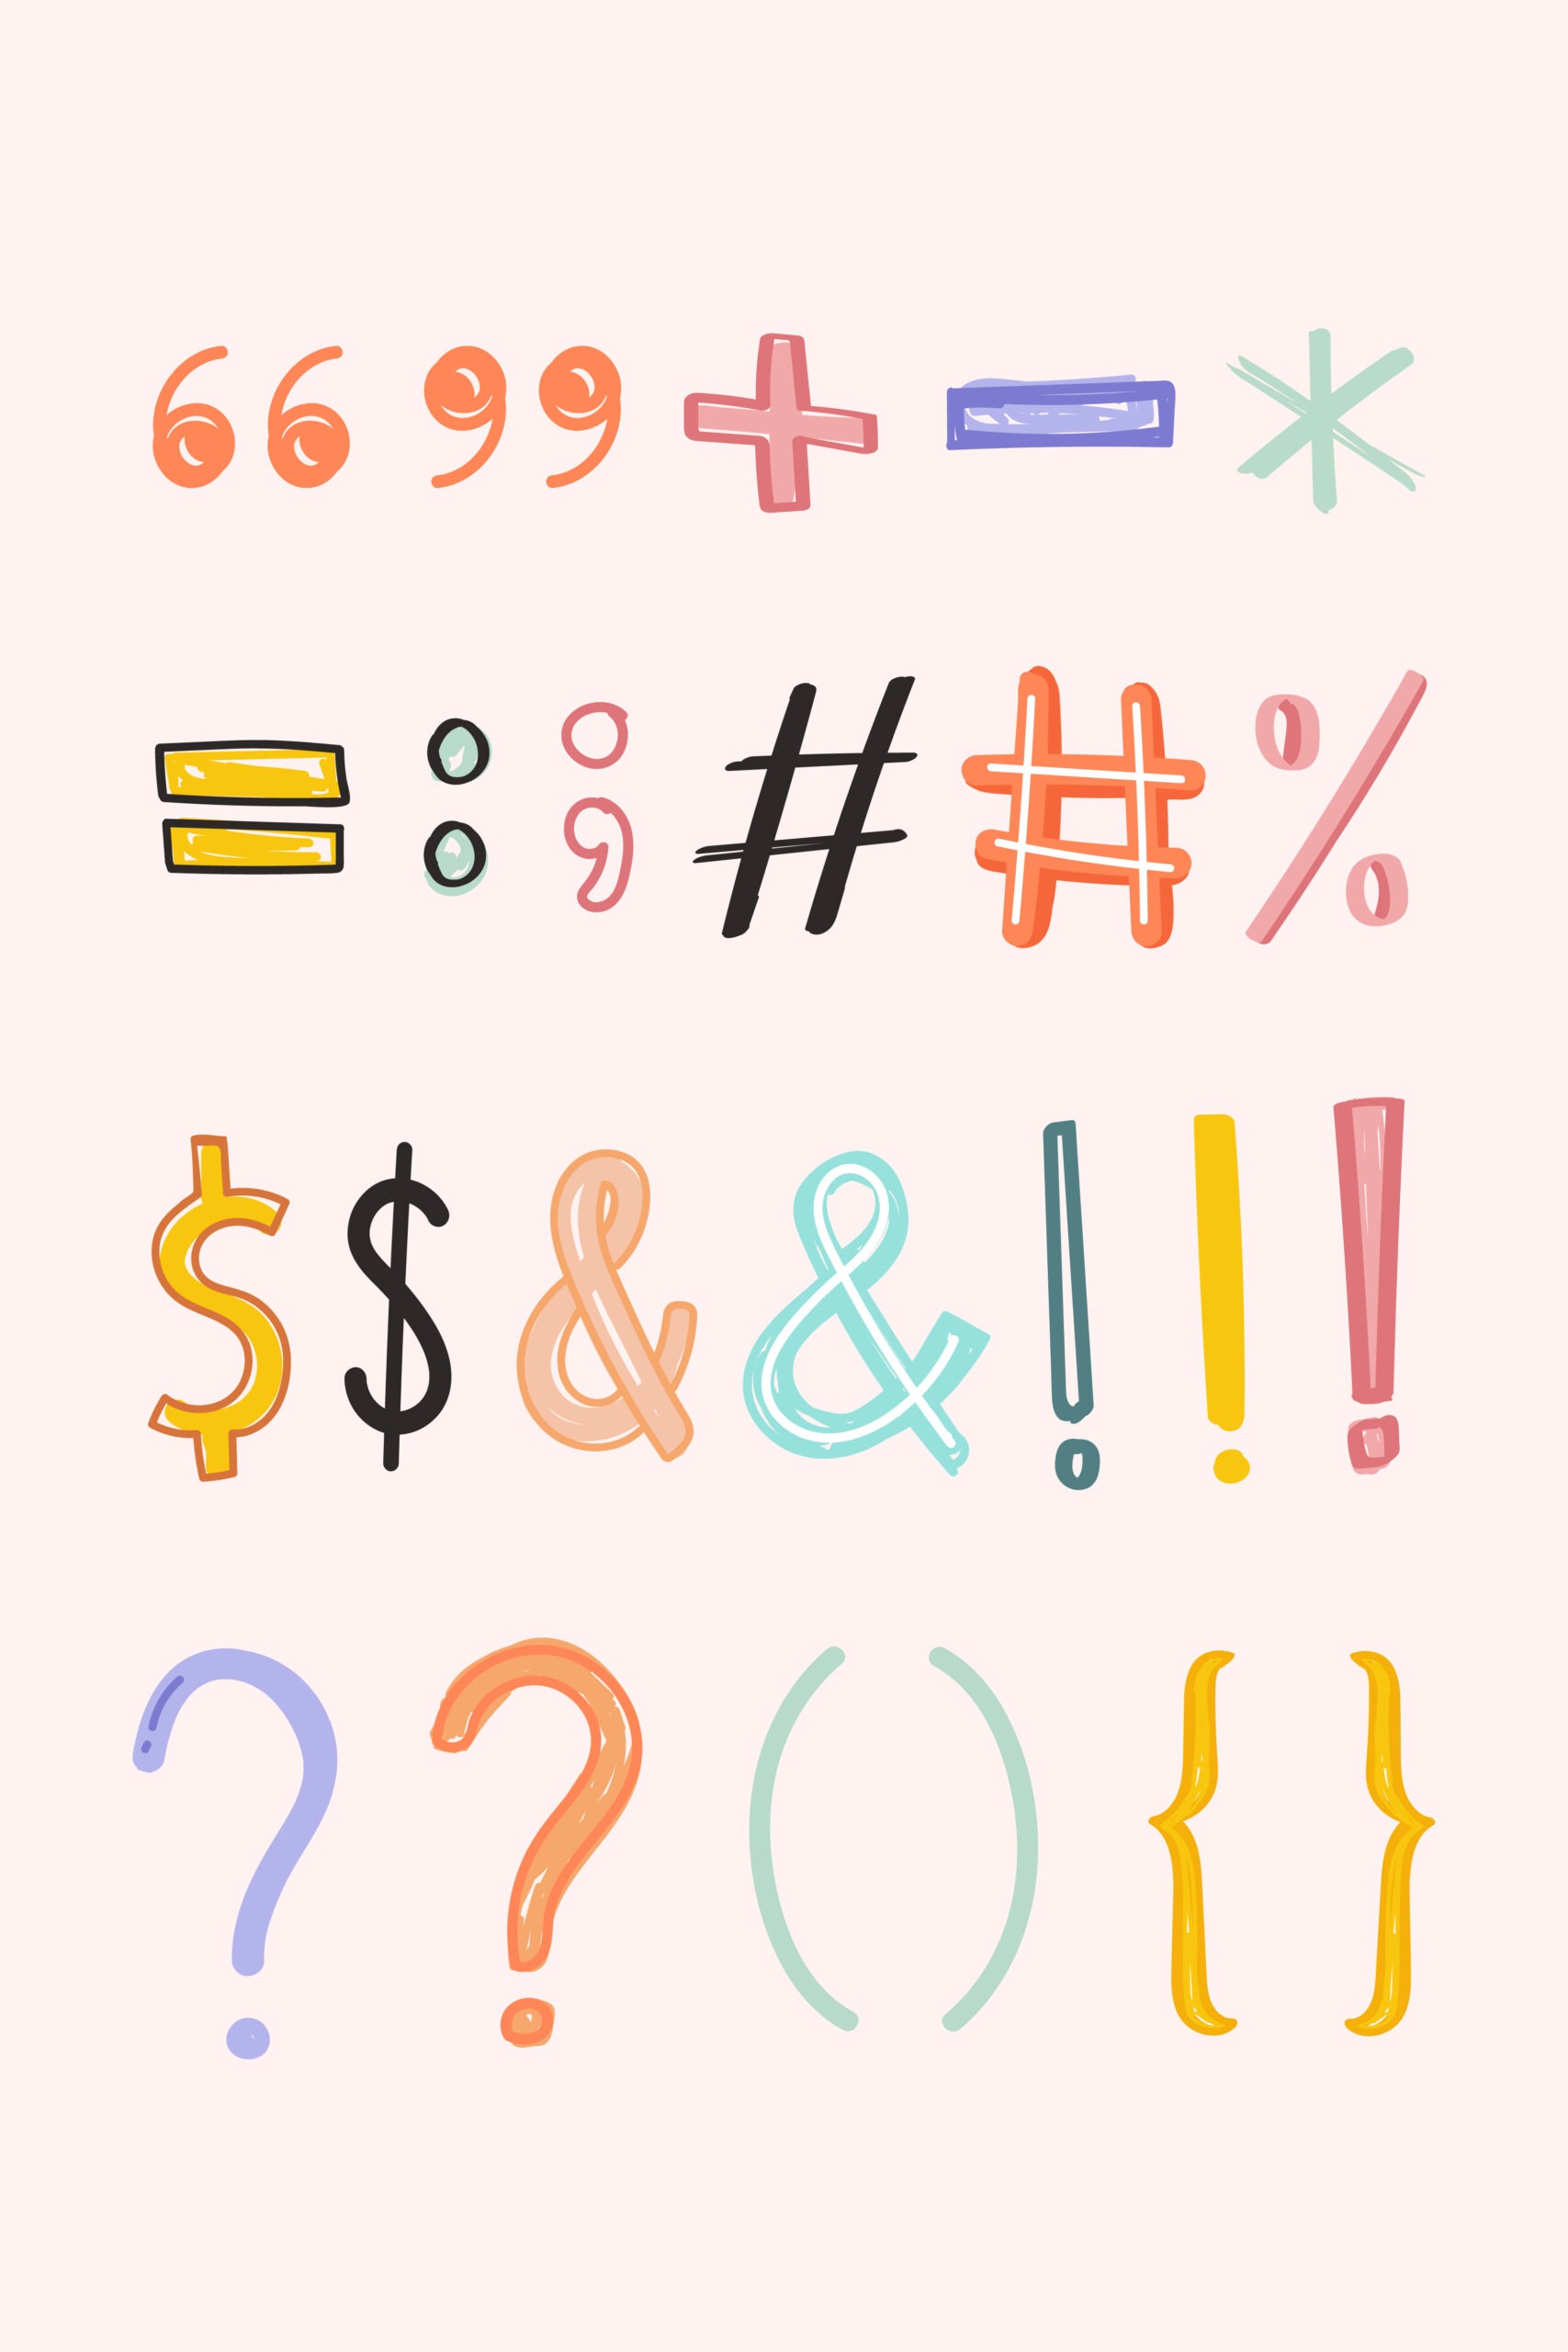 Colorful, doodled punctuation symbols